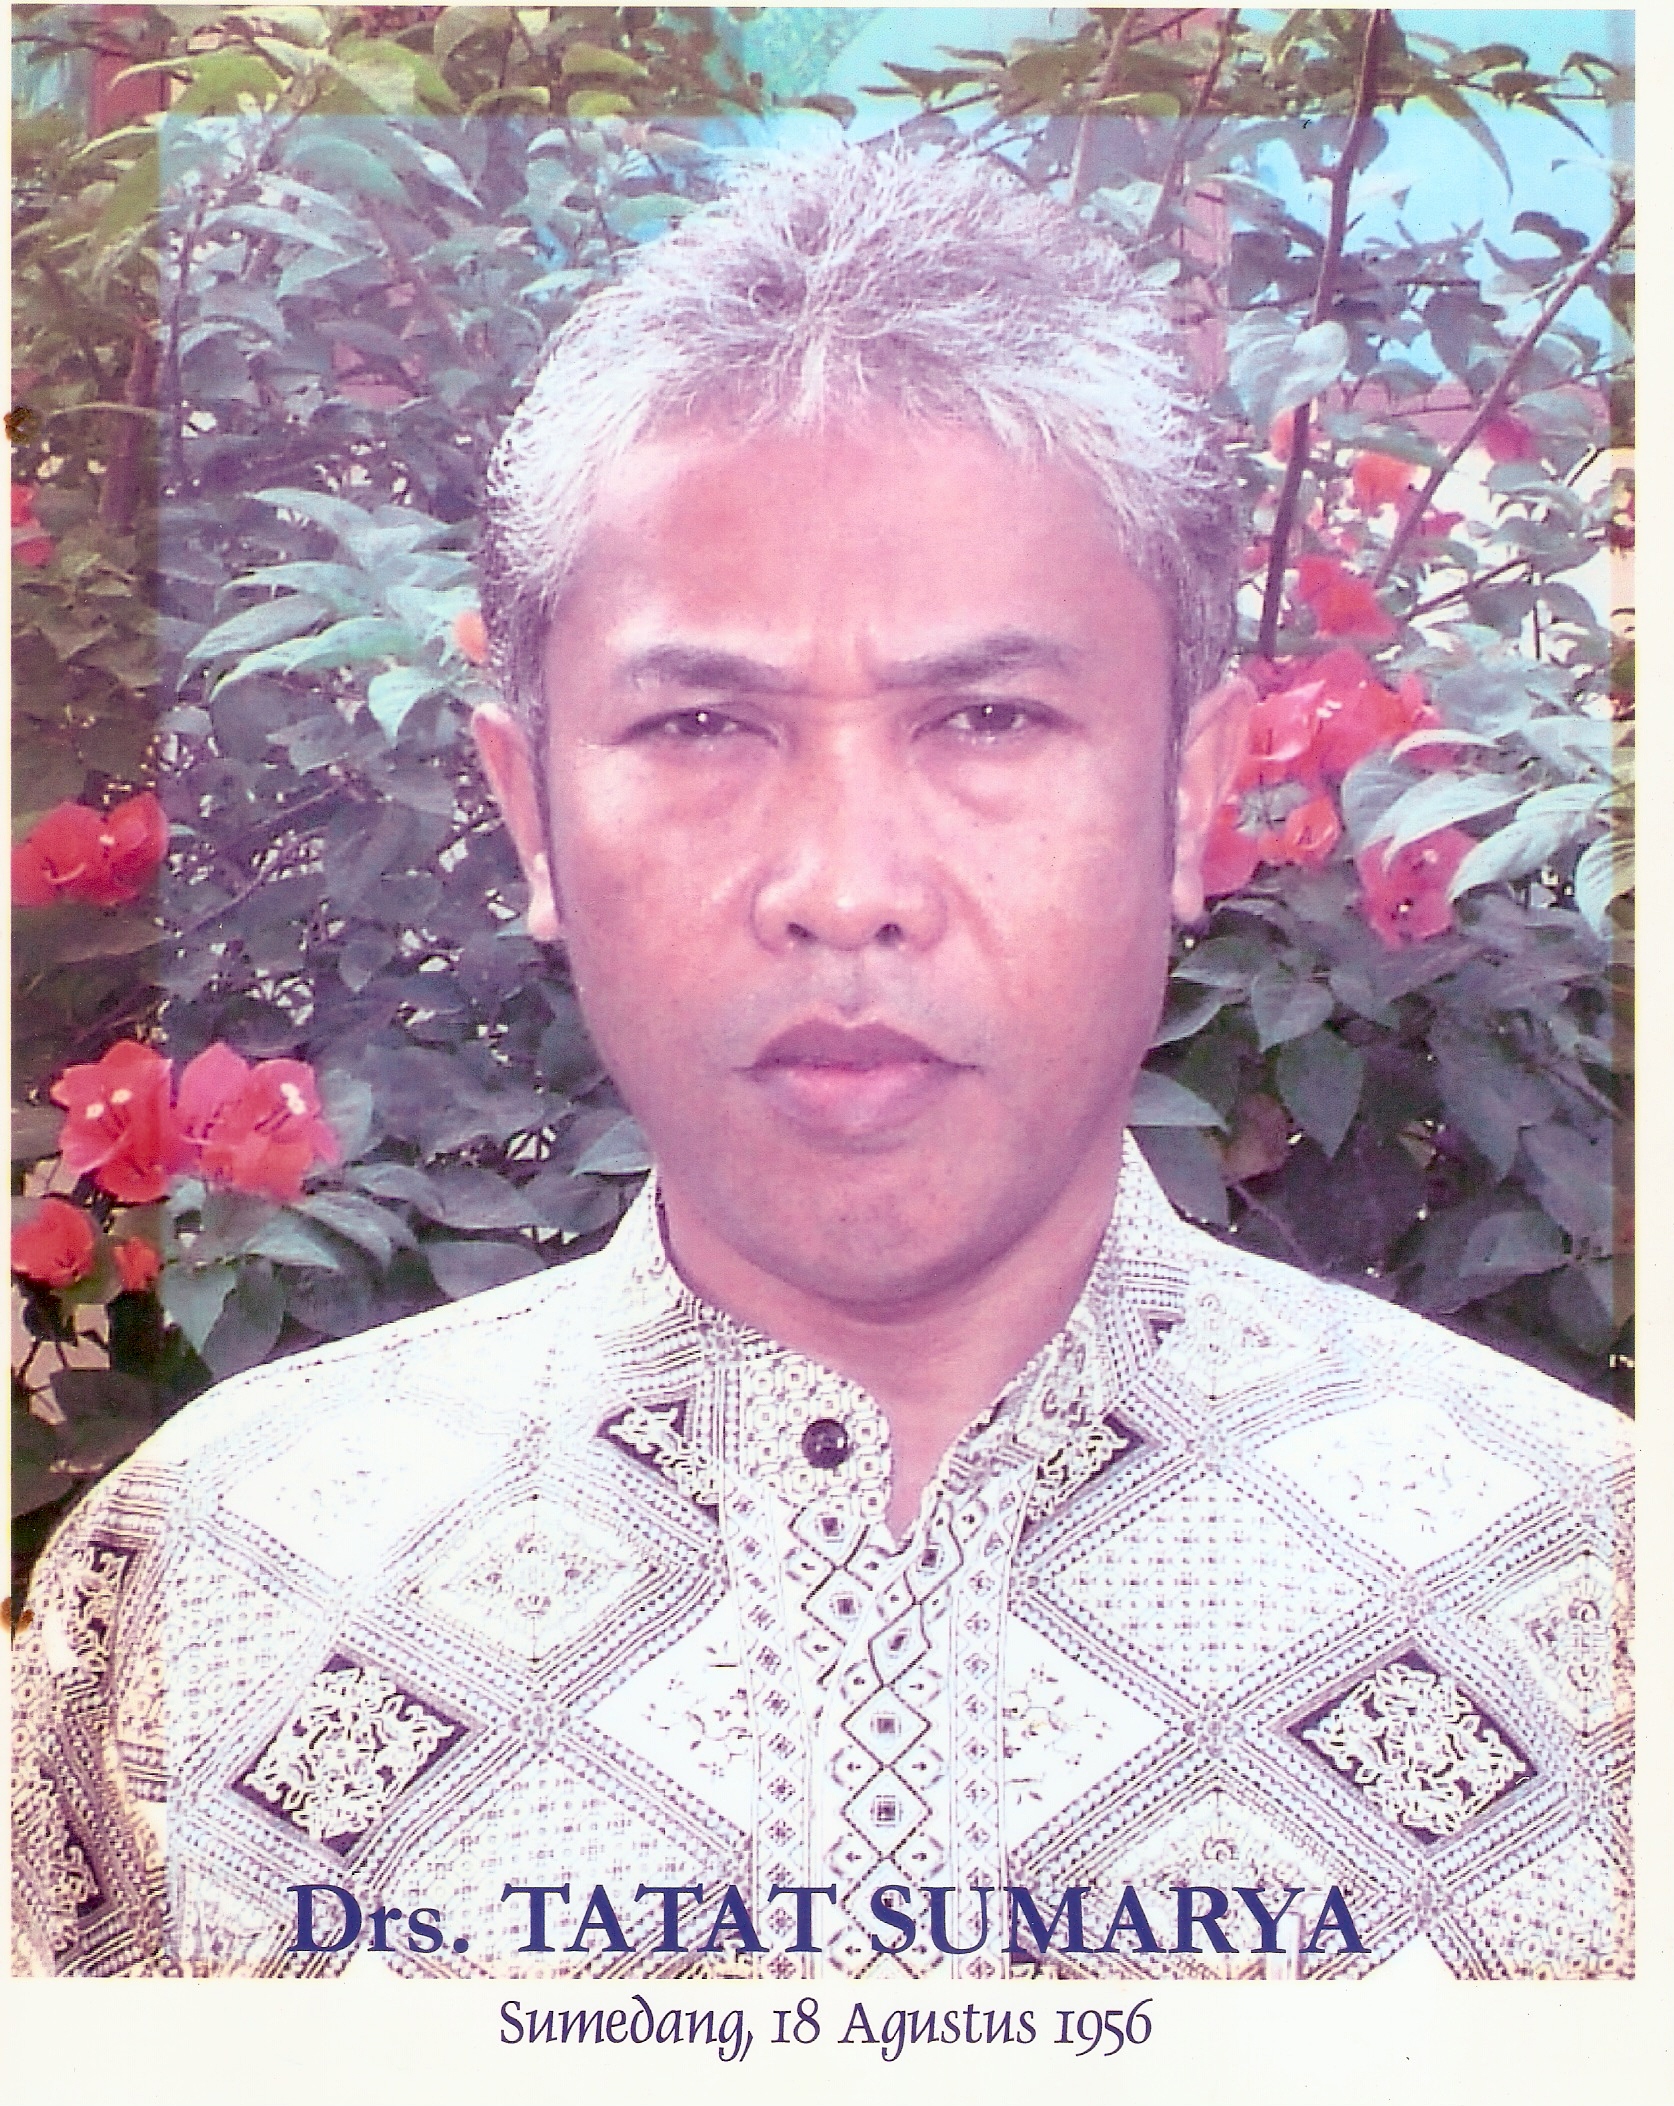 Drs. TATAT SUMARYA